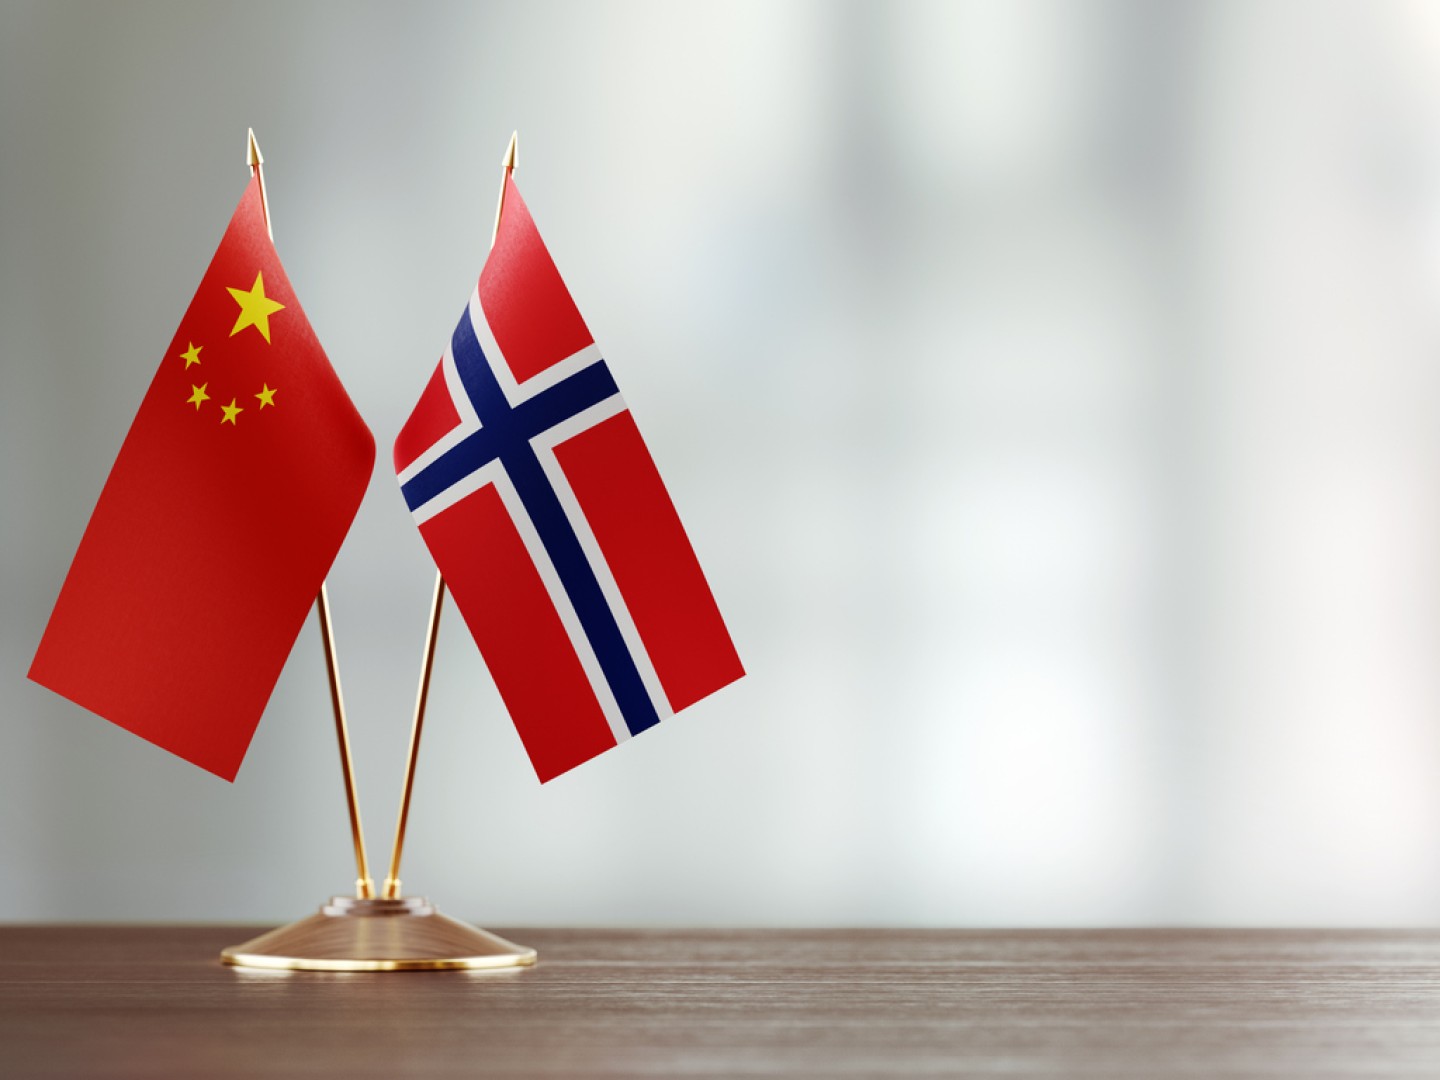 Norsk og kinesisk flagg i stativ sammen på et bord